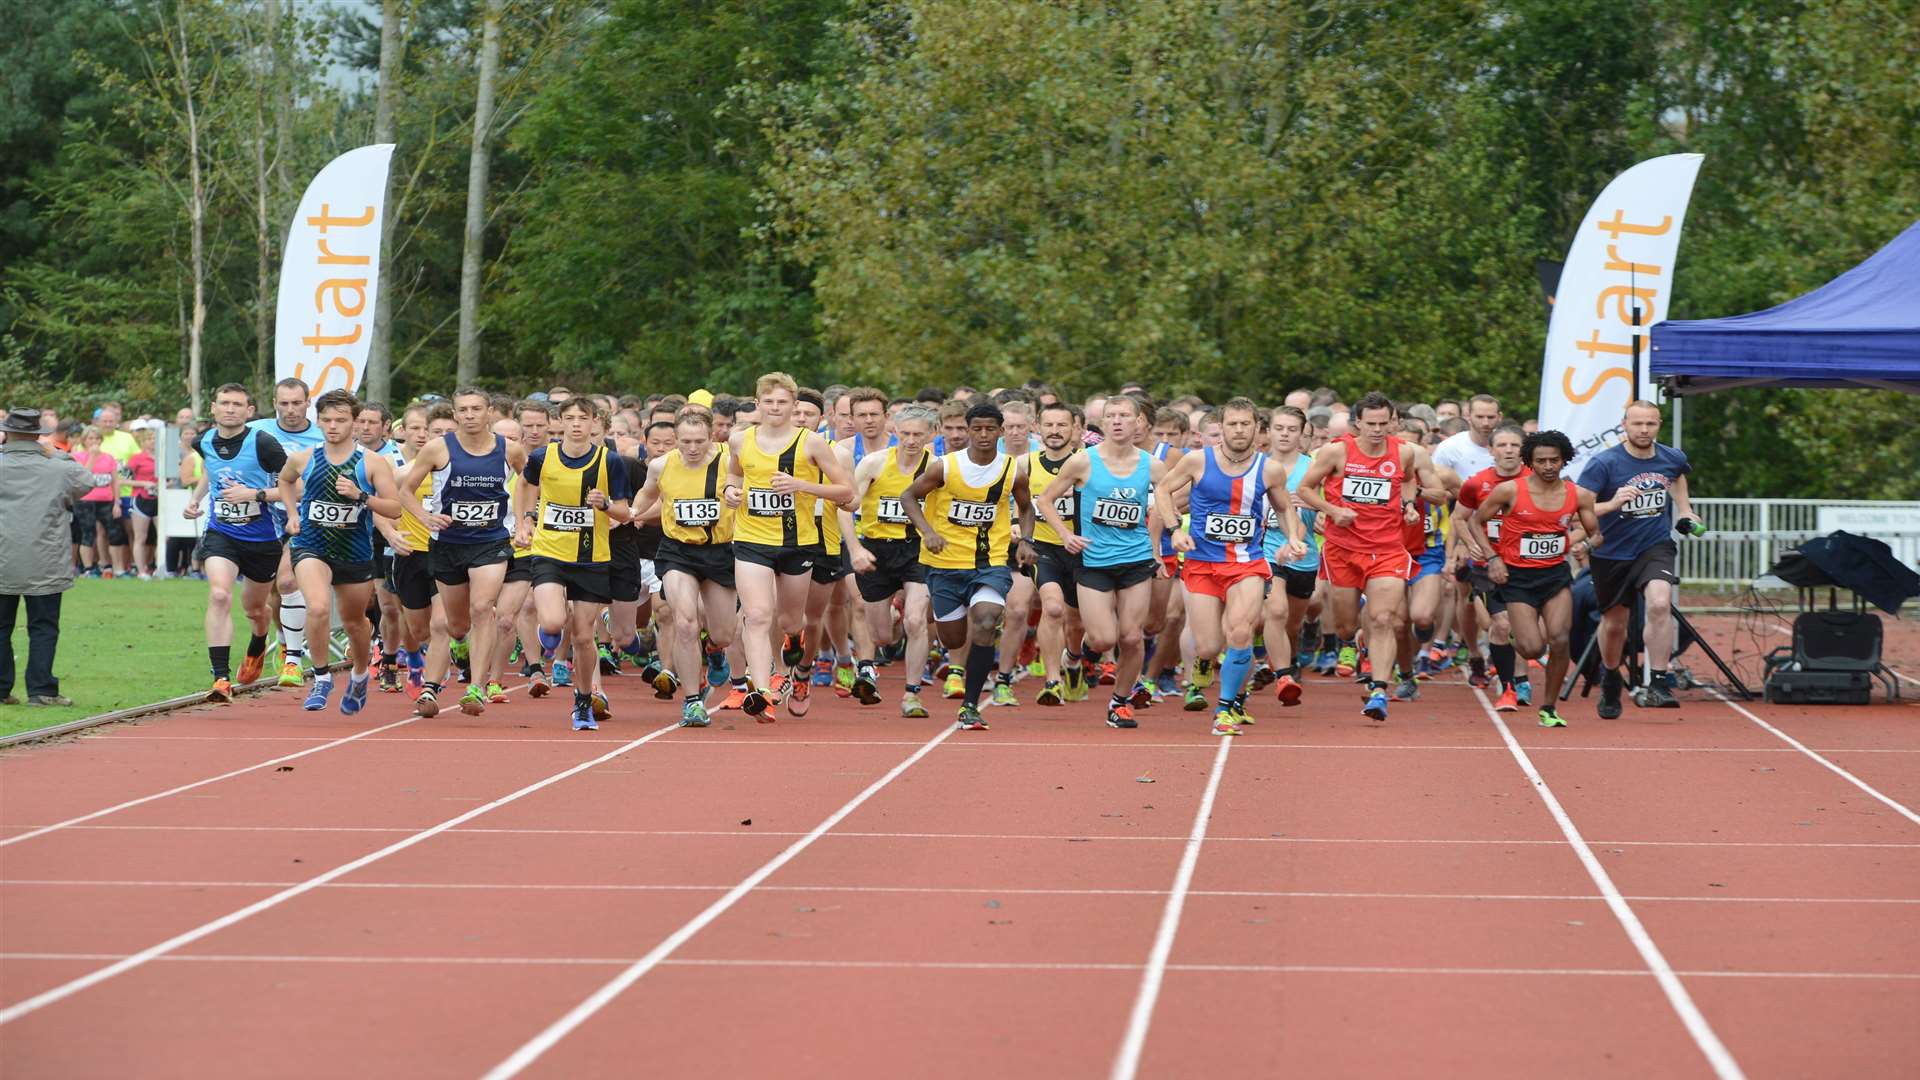 Runners at the 30th annual Givaudan Ashford 10k